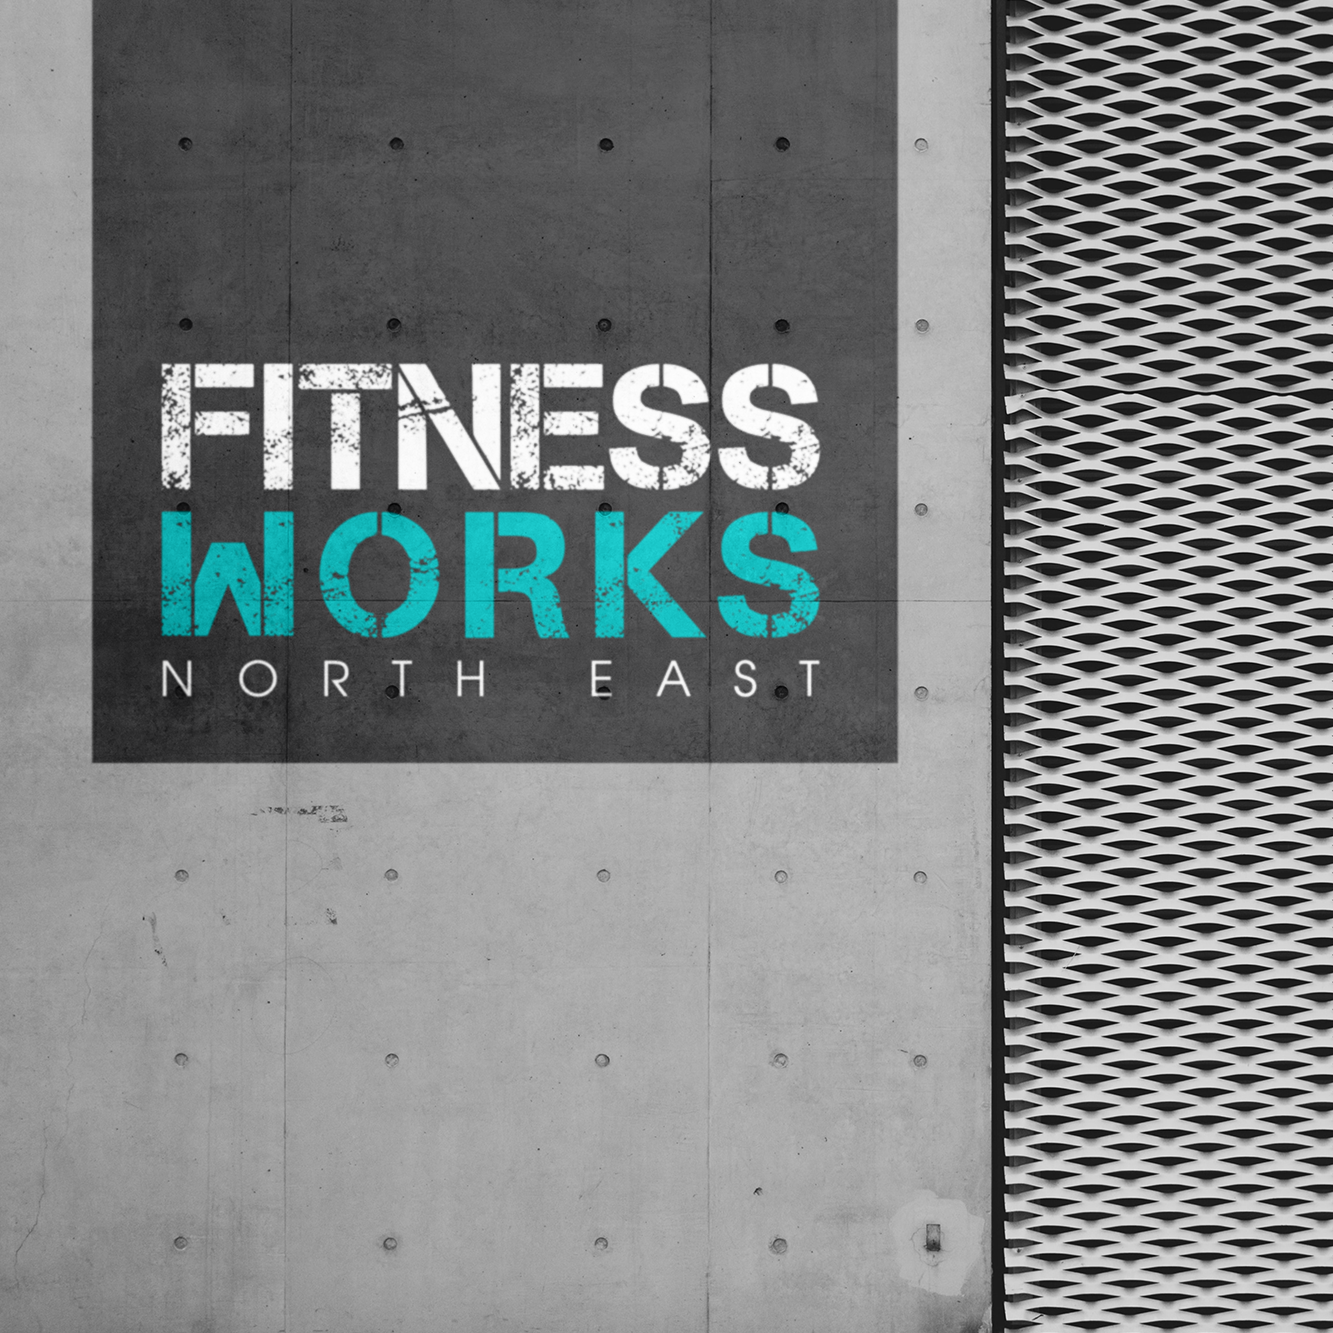 fitness works branding design services newcastle